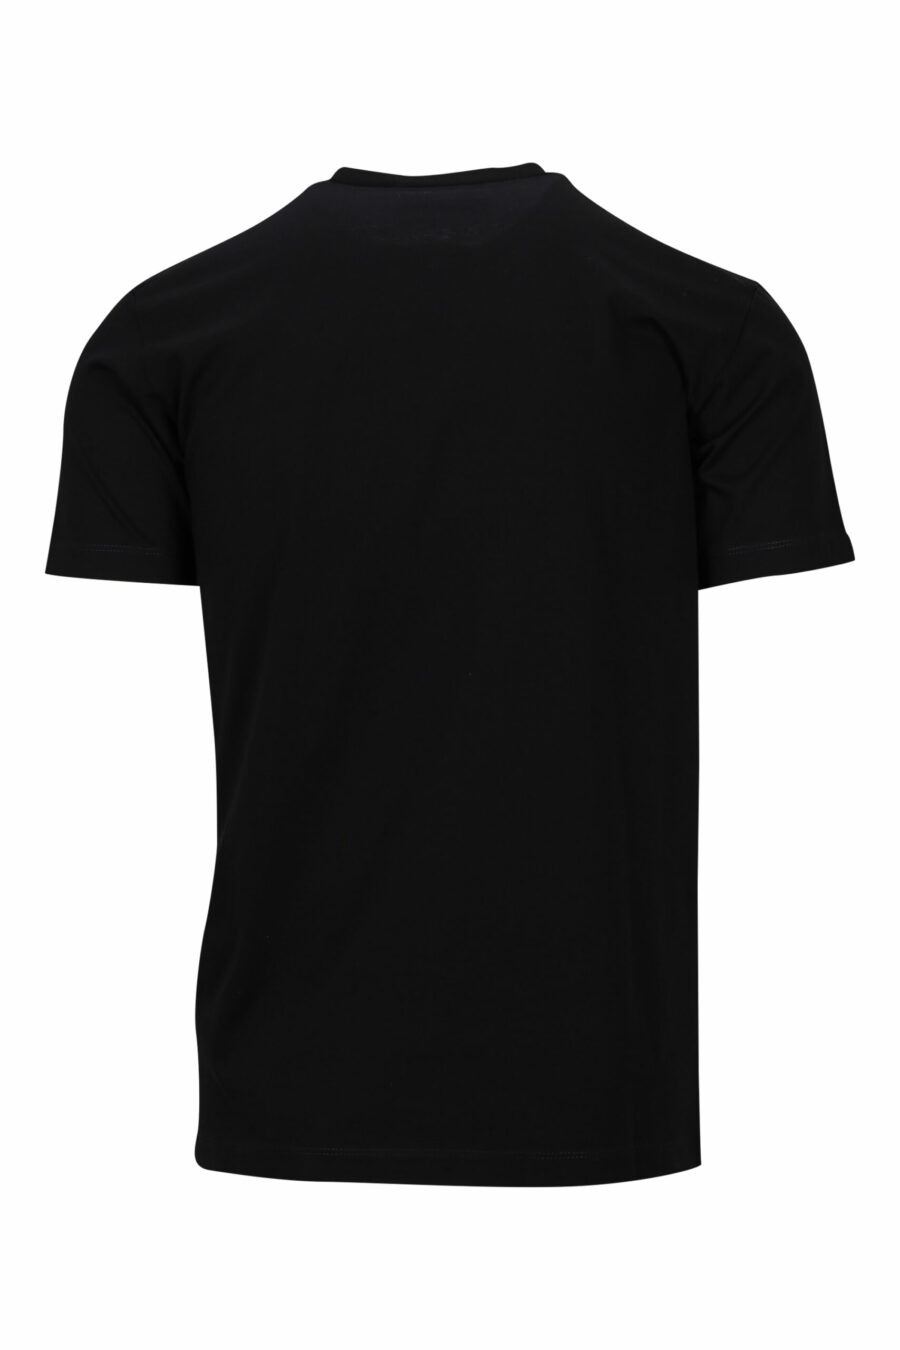 T-shirt preta com logótipo em chapa pequena - 8054148370800